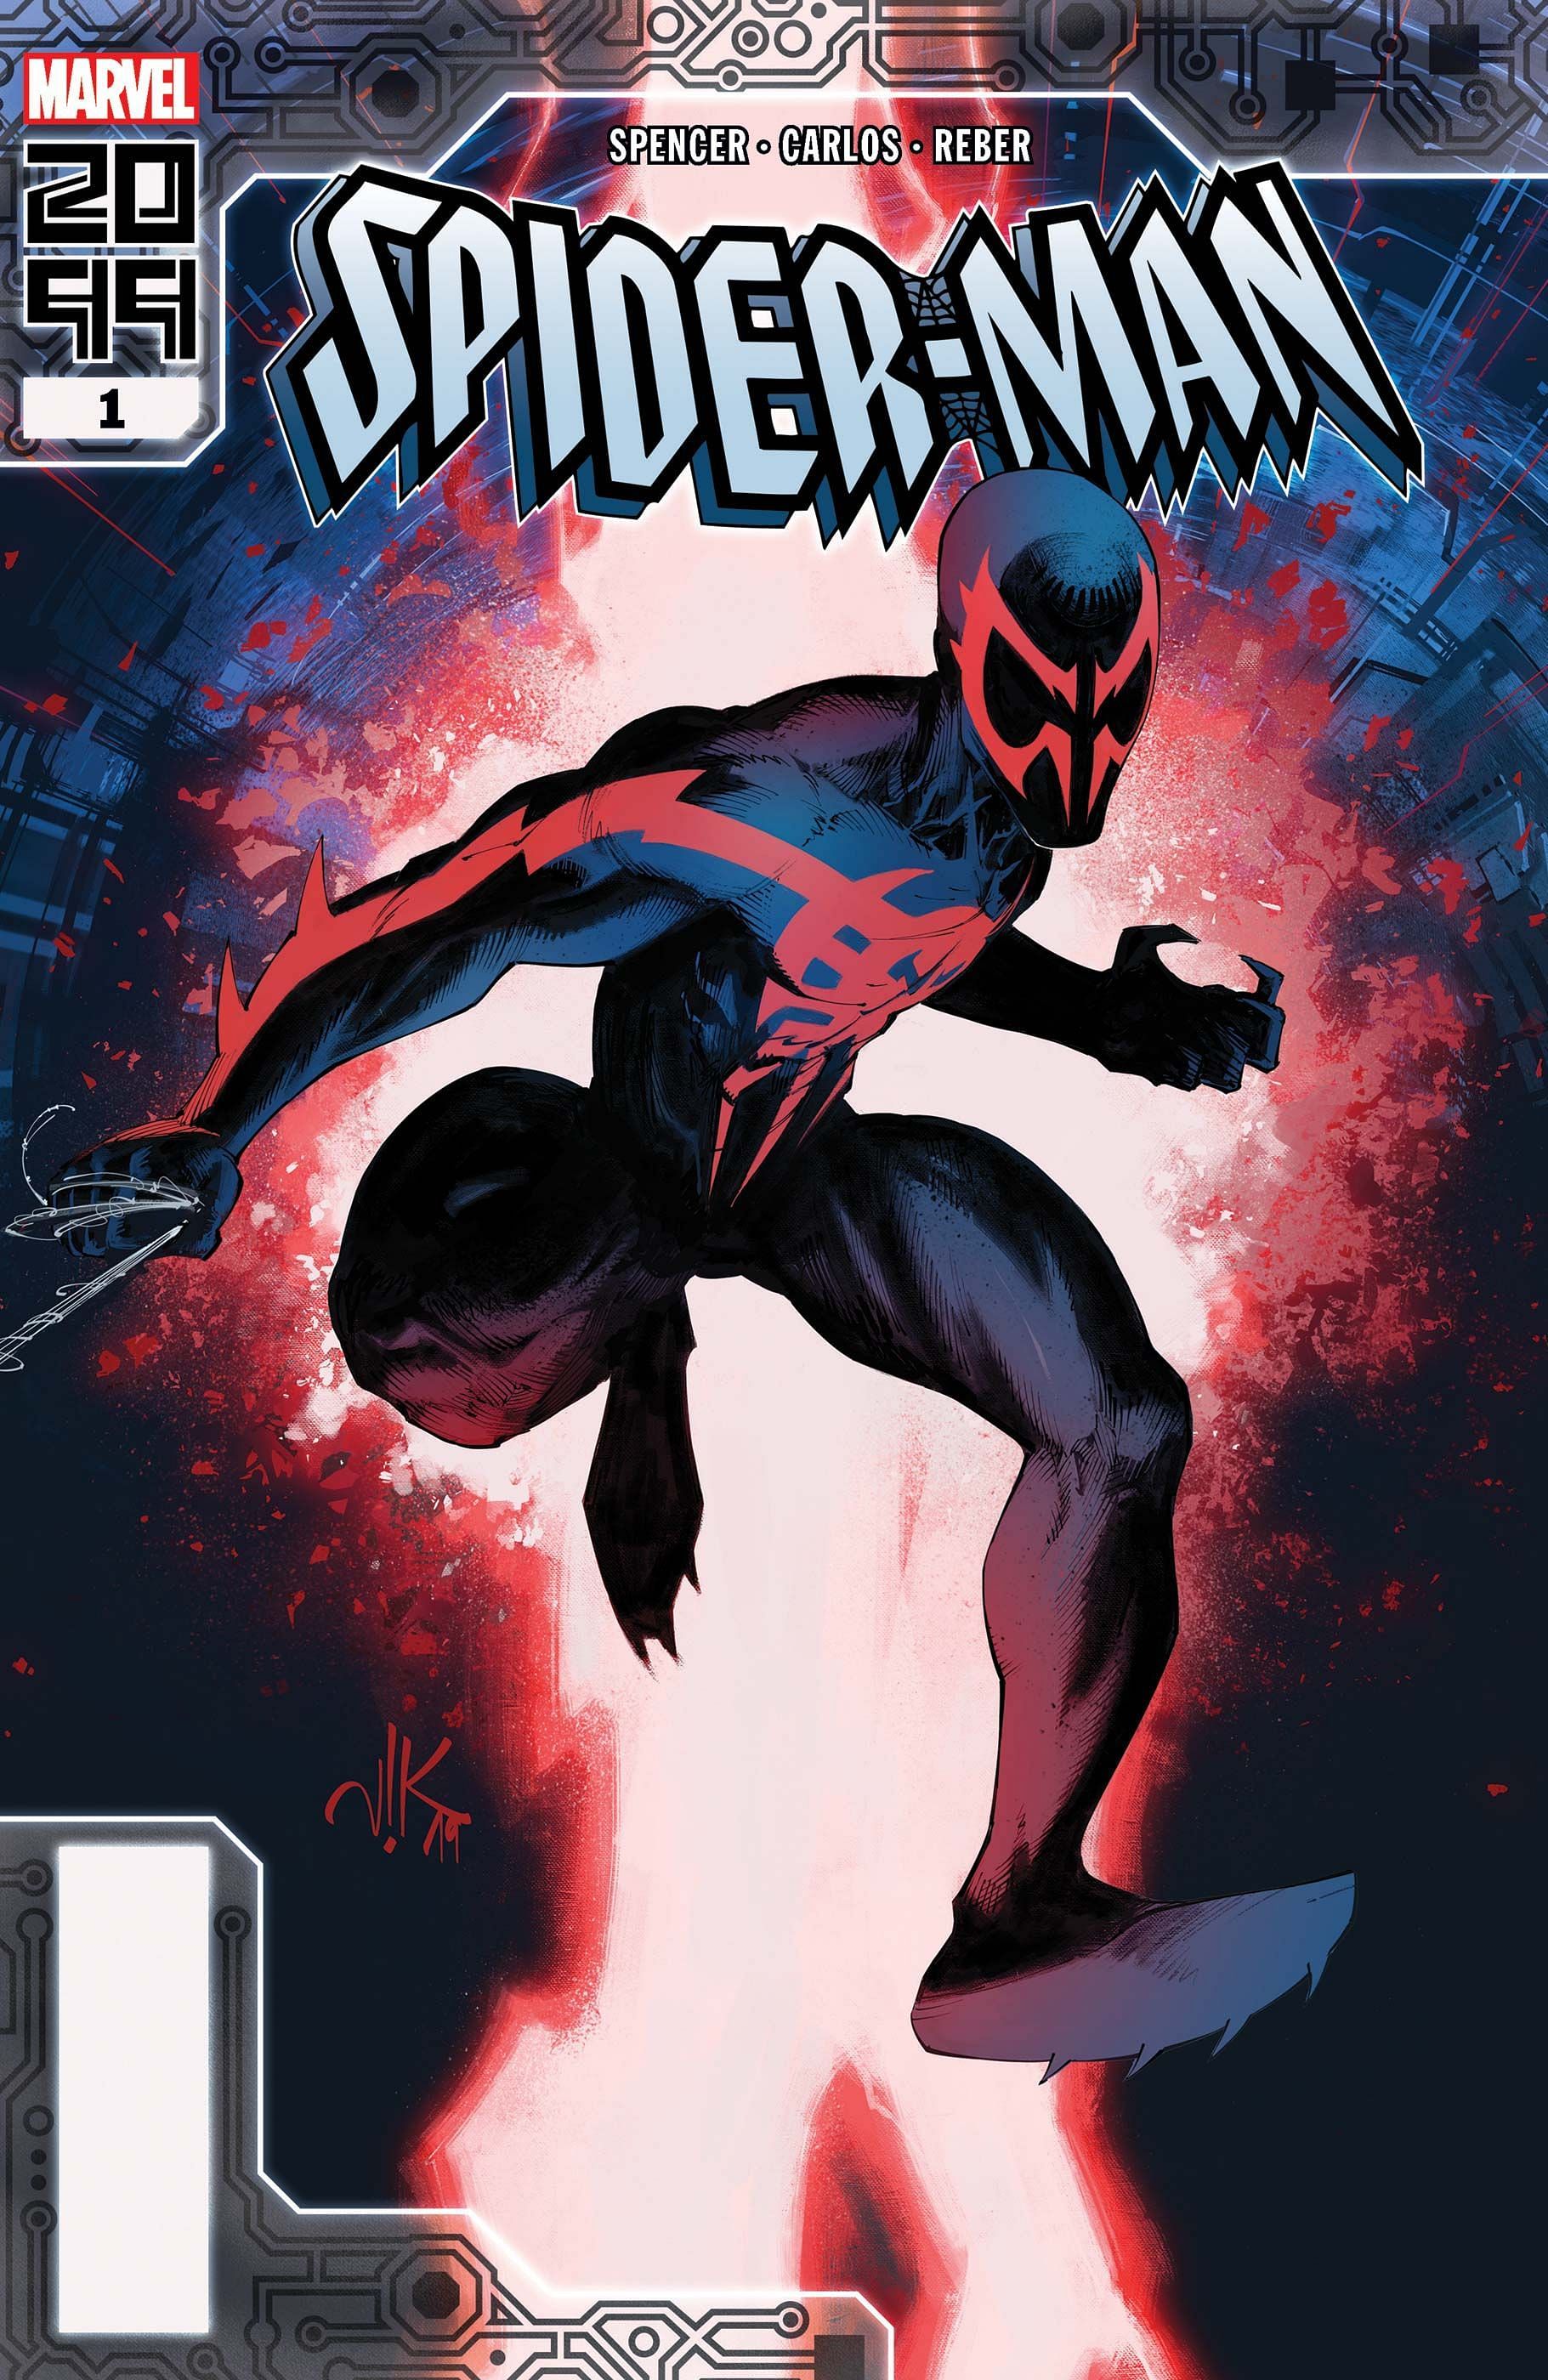 Spider-Man 2099 comic cover (Image via Marvel Comics)